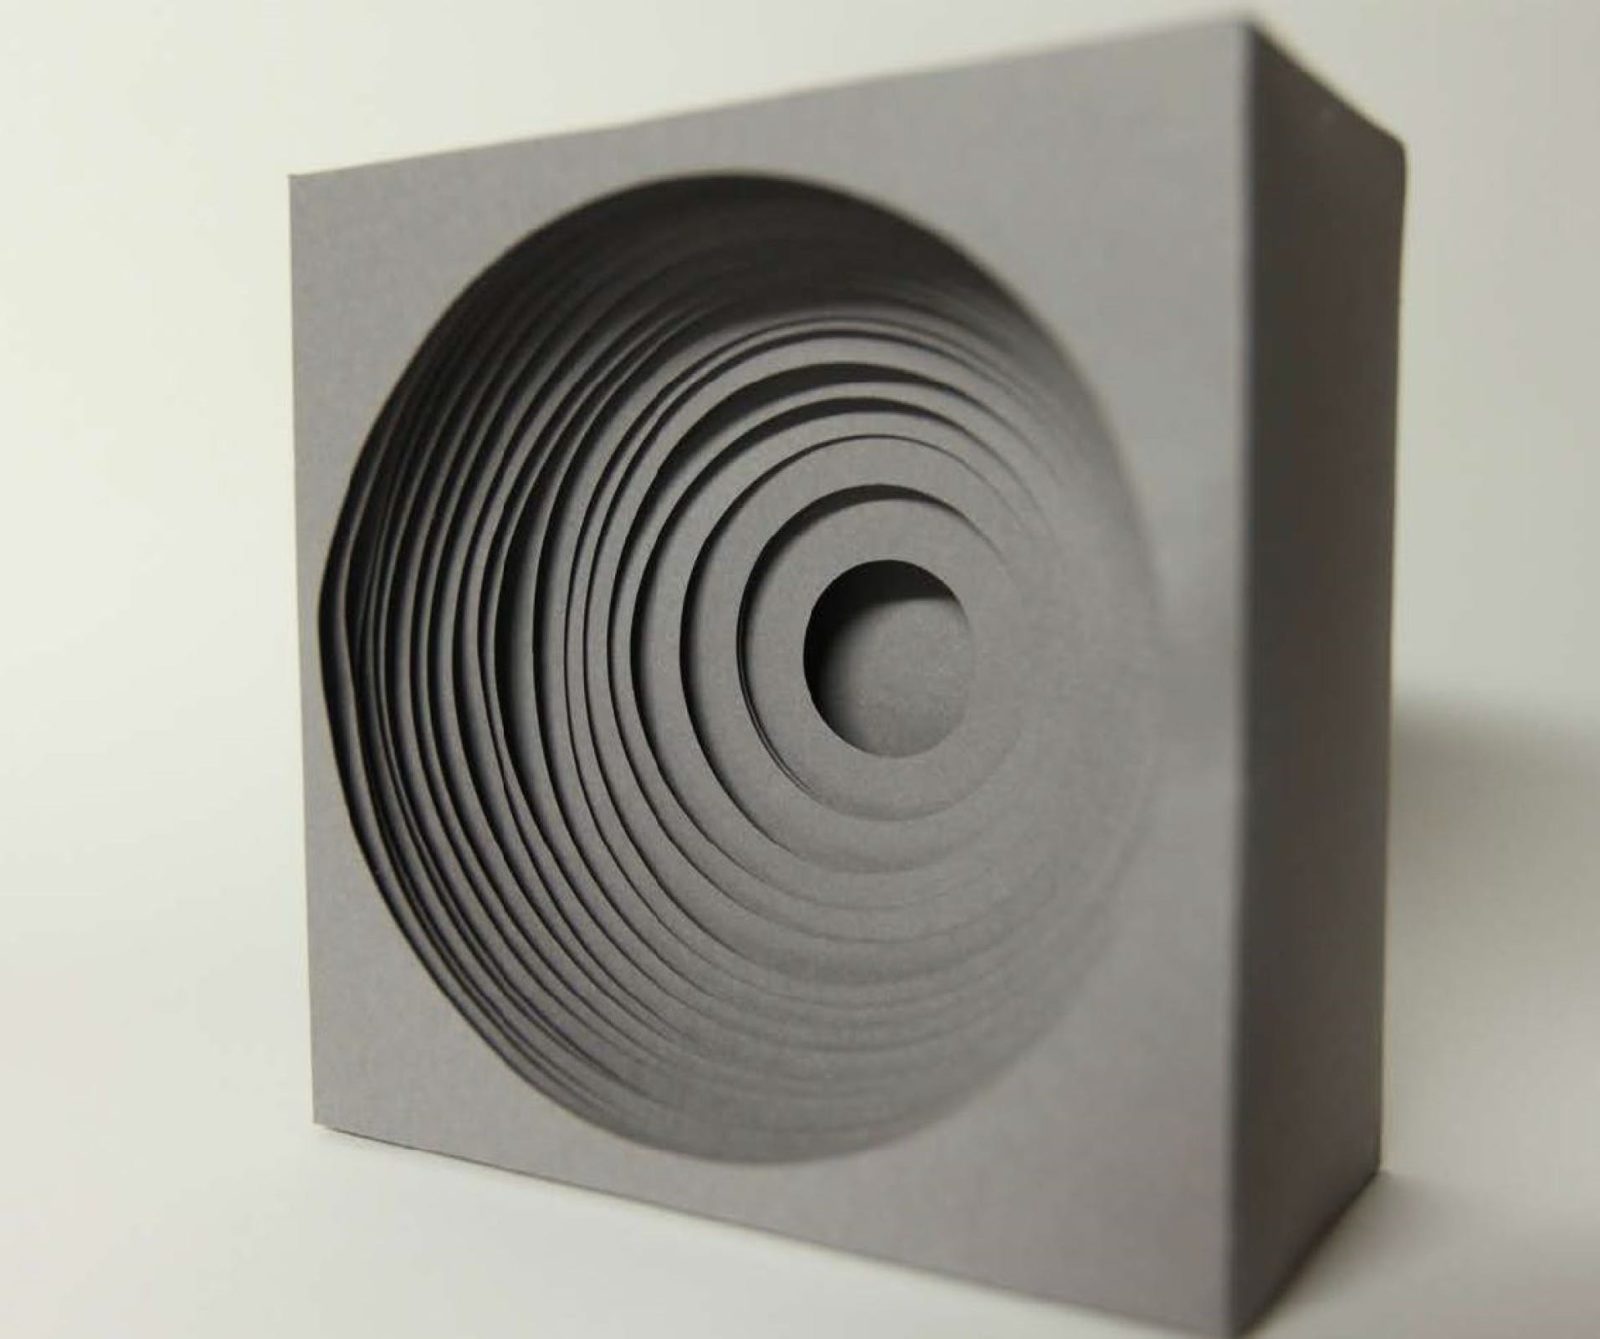 Photograph of grey paper sculpture